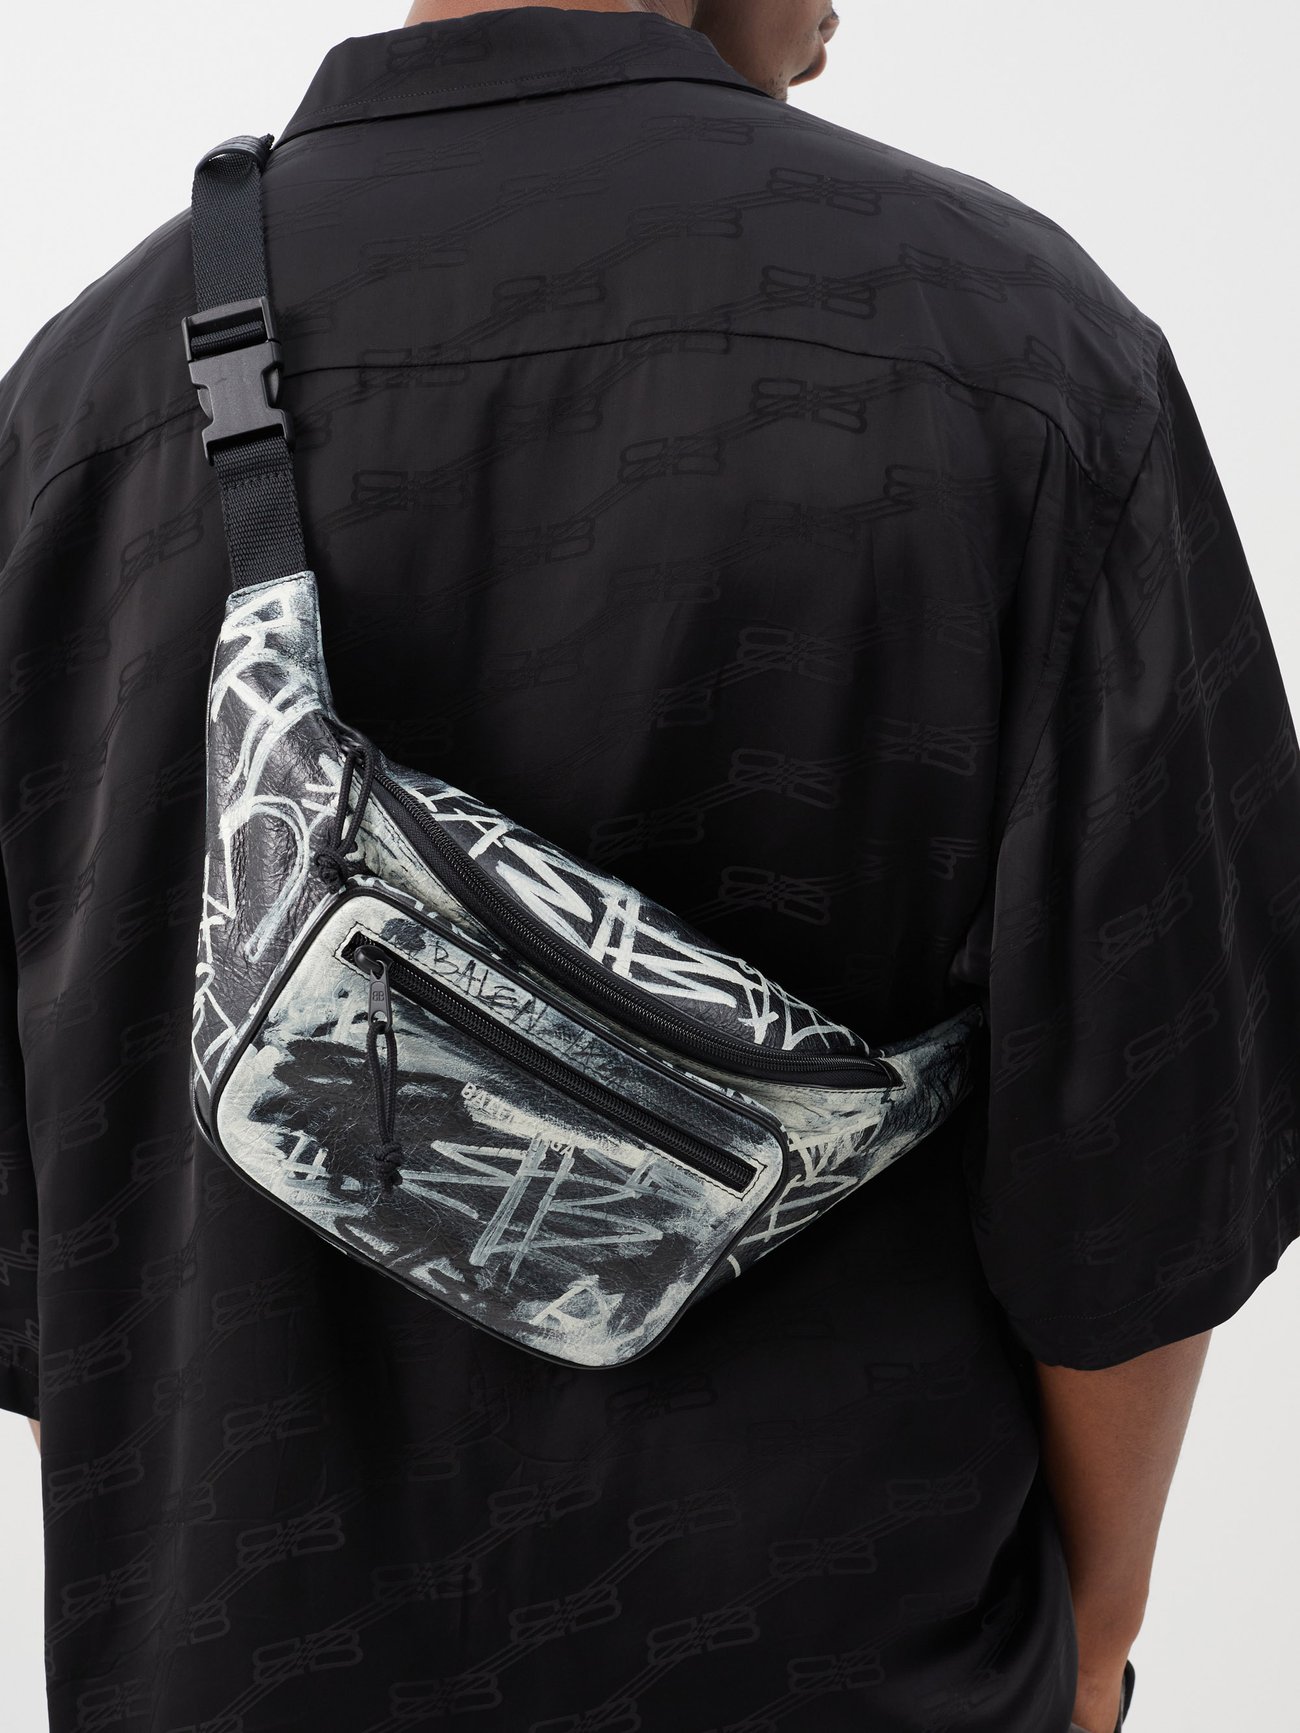 Balenciaga, Bags, Balenciaga Graffiti Explorer Belt Bag Leather Medium  Black Print Brand New